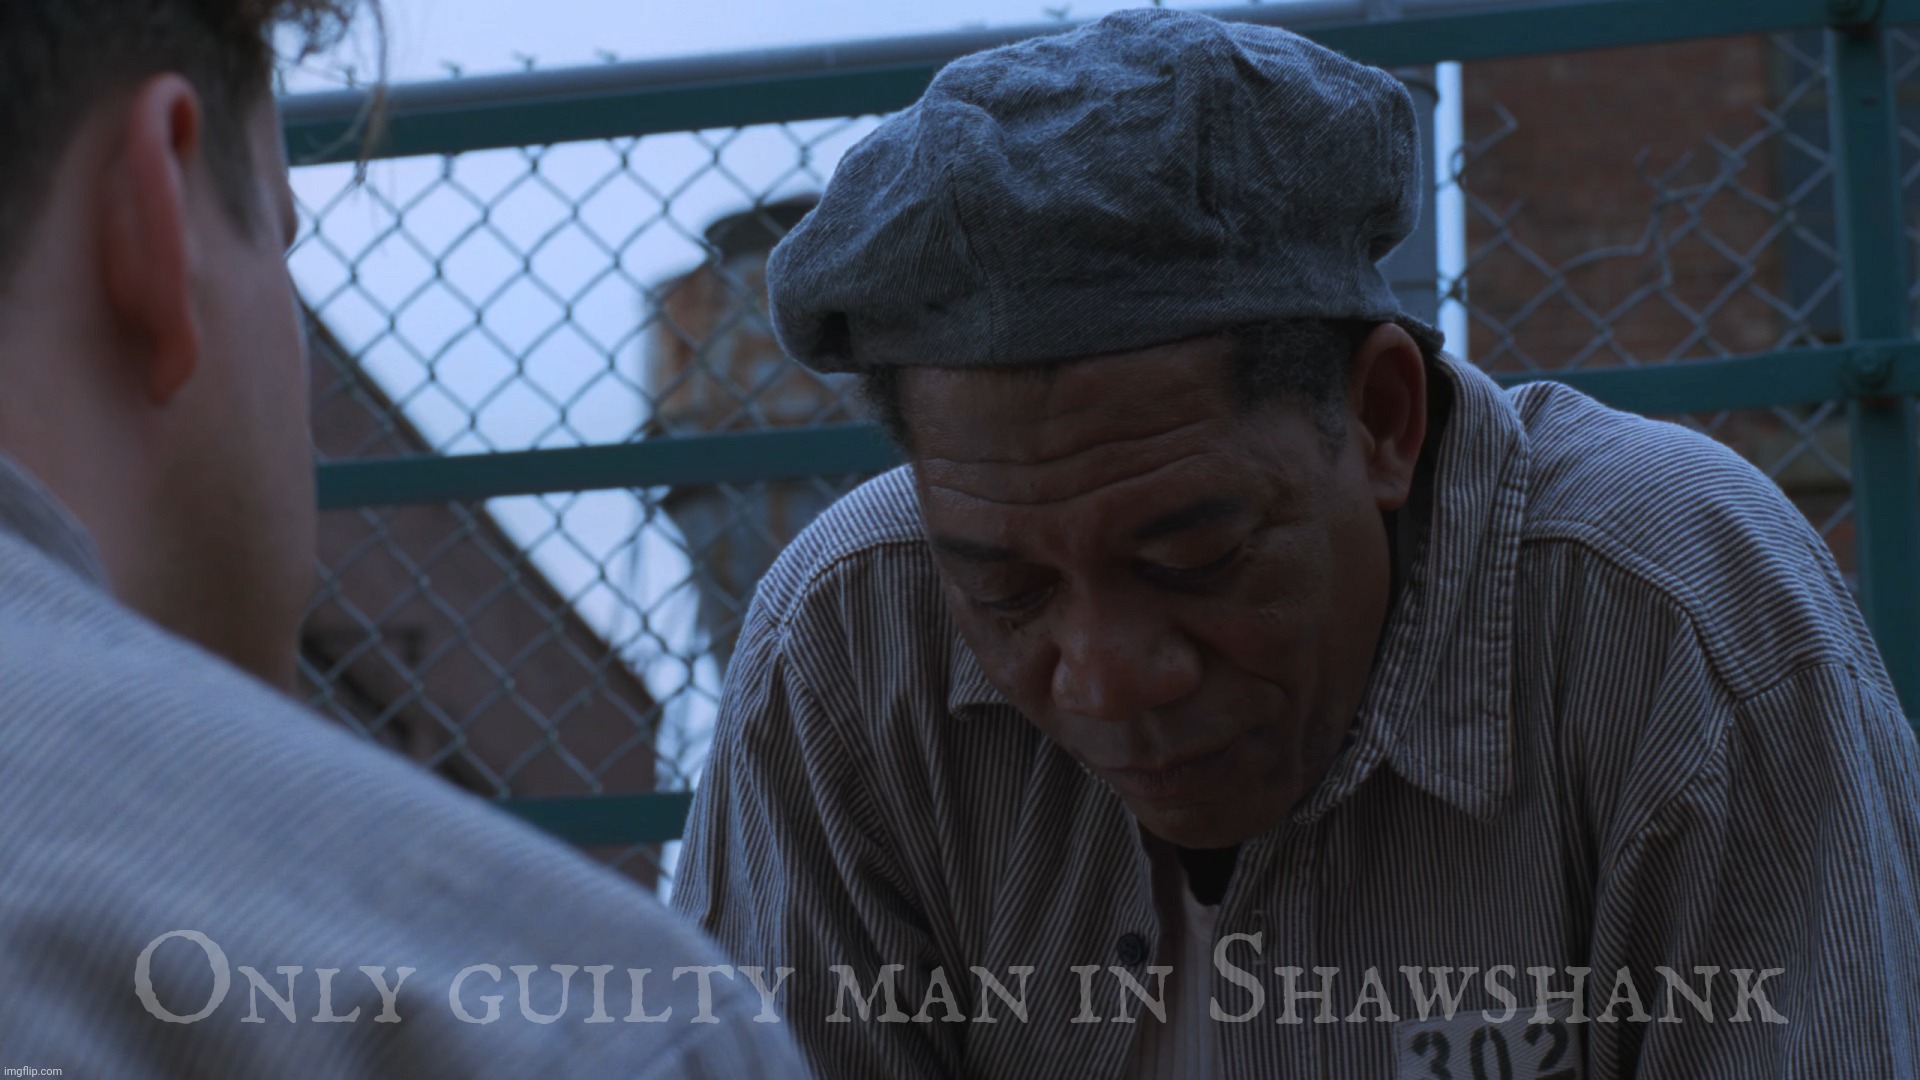 Only guilty man in Shawshank | made w/ Imgflip meme maker